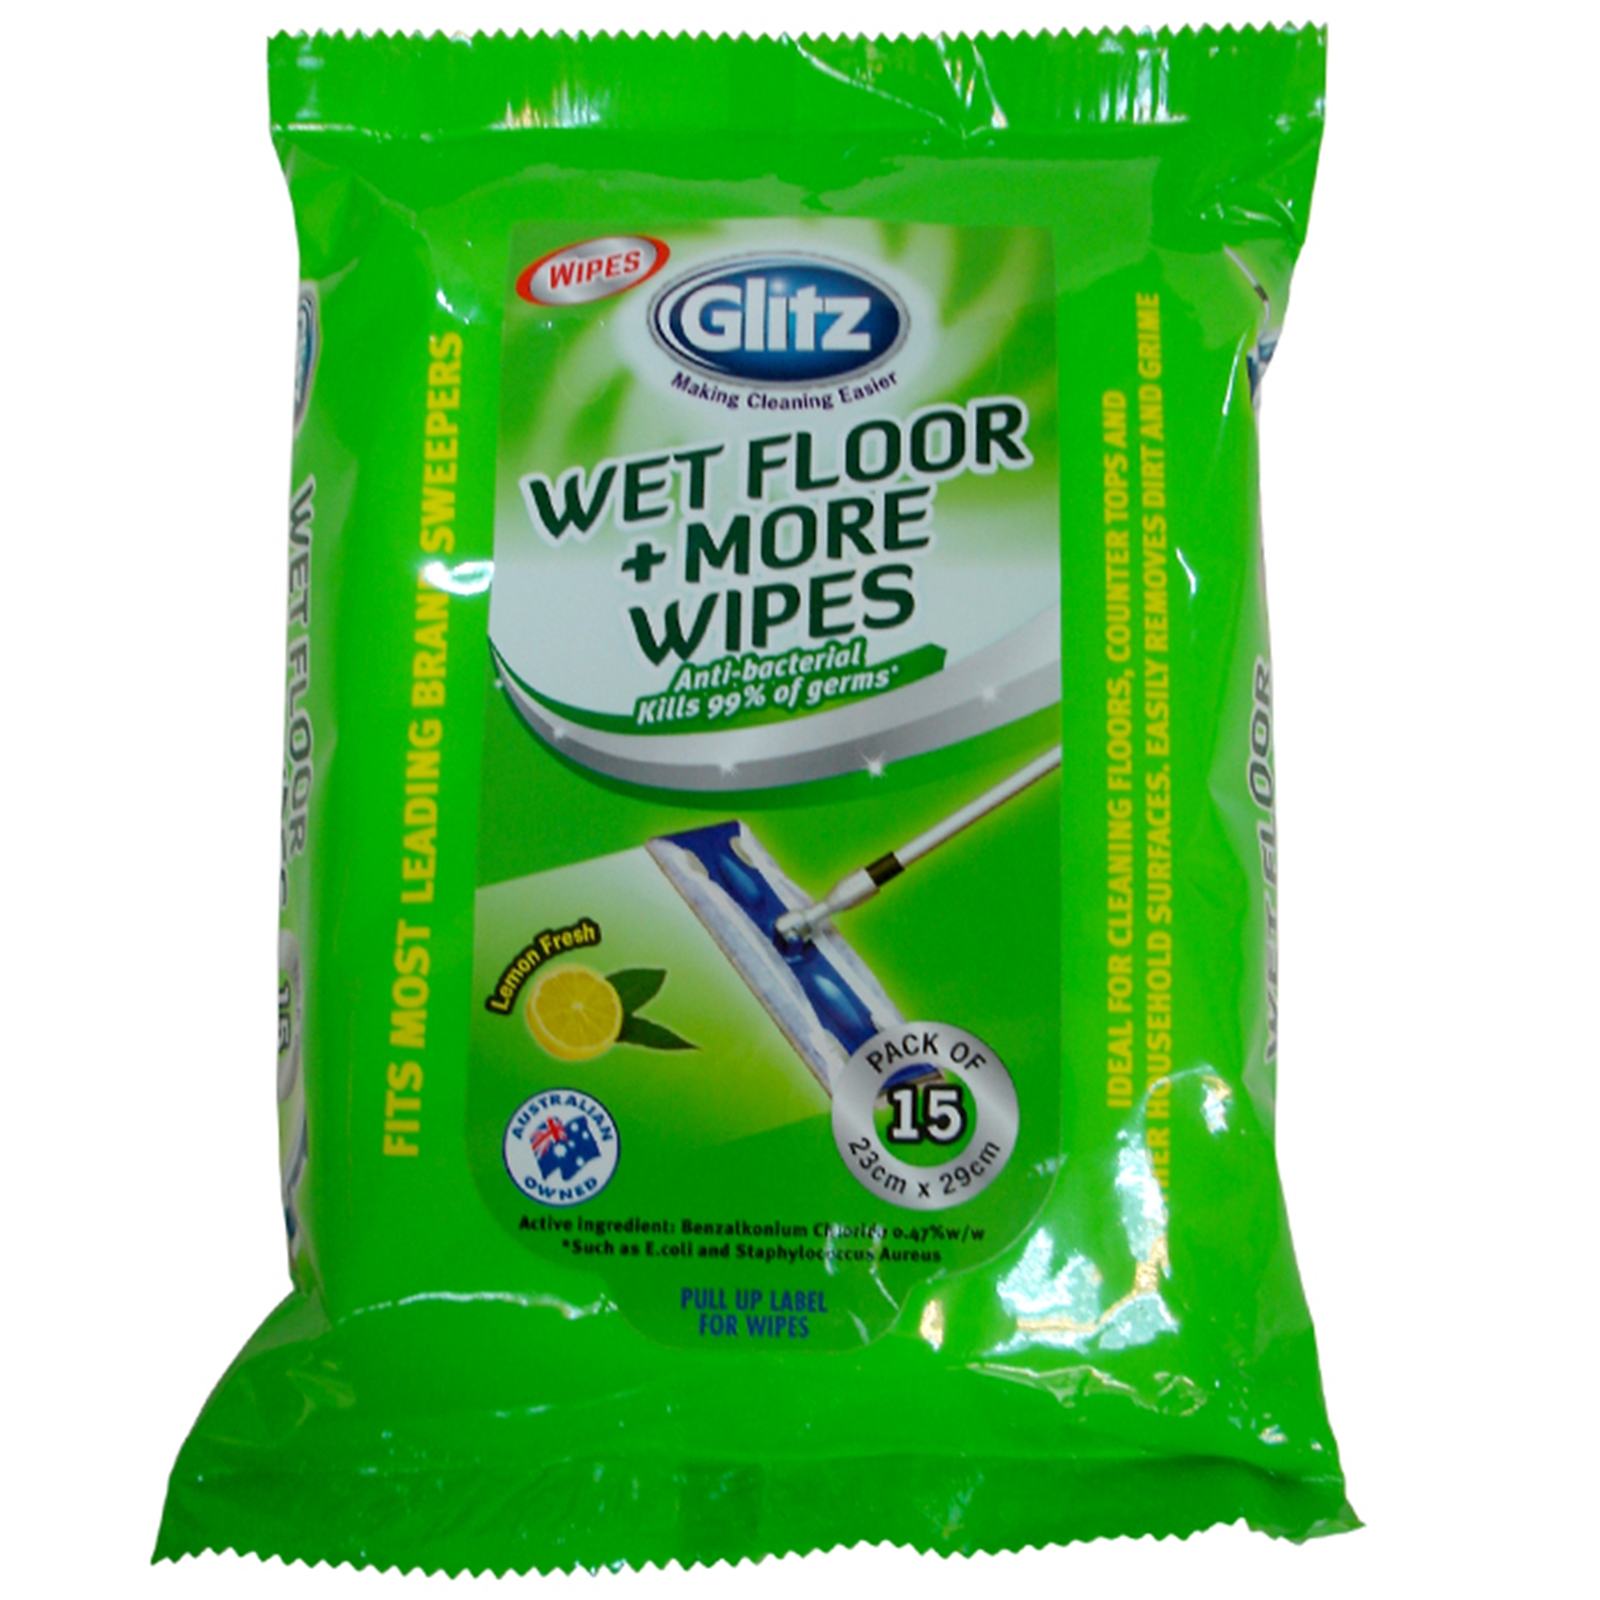 Glitz Wet Floor And More Wipe - 15 Pack